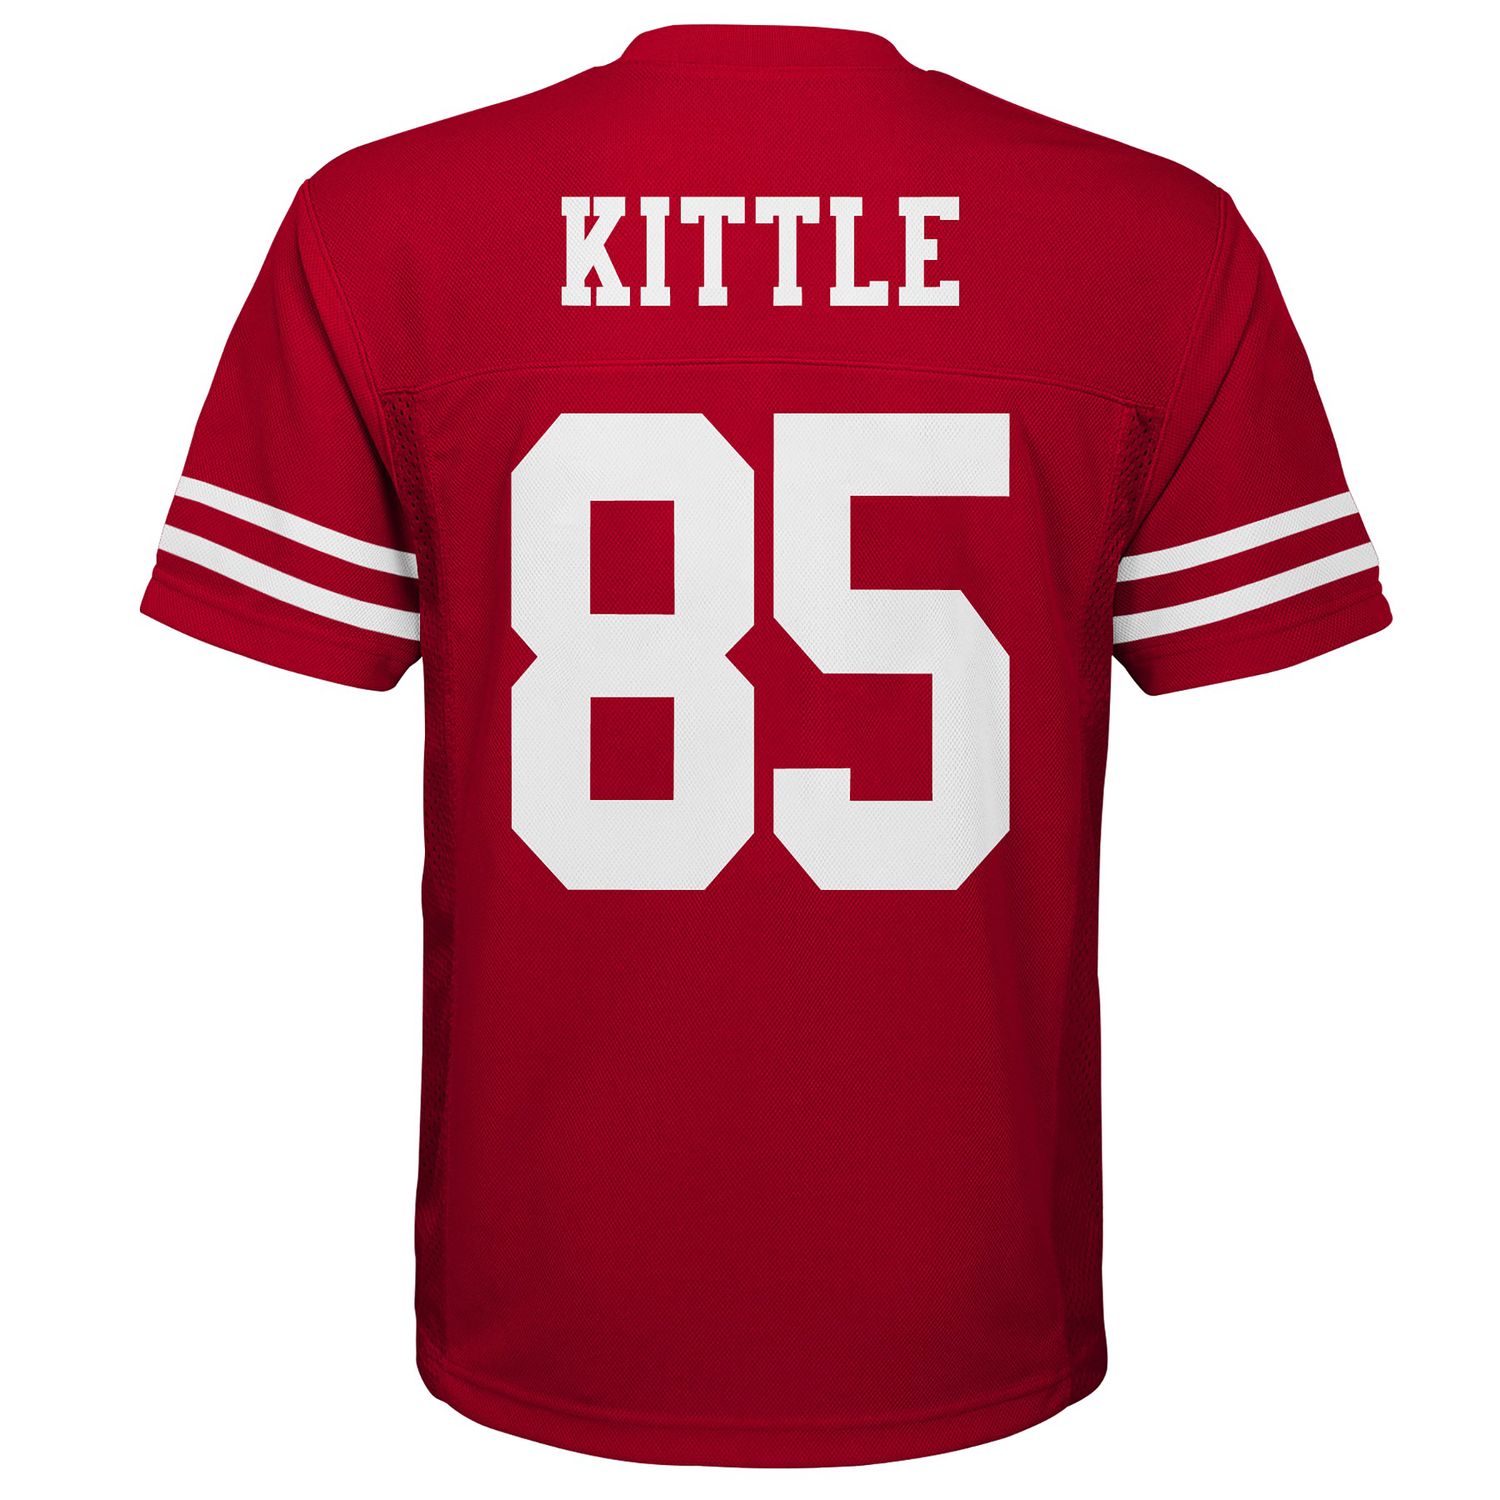 kittle 49ers jersey